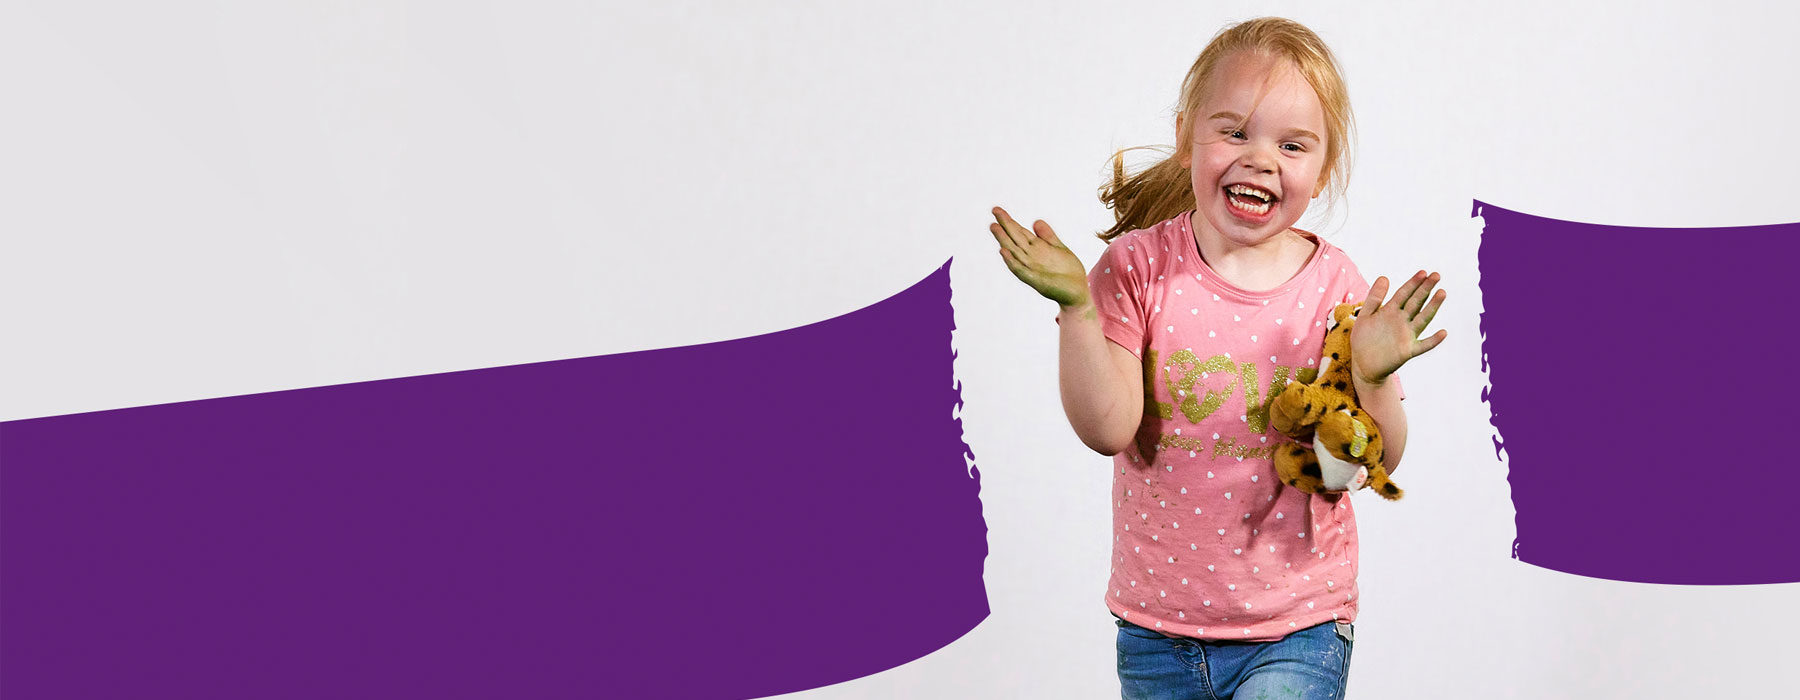 Smiling little girl breaks through a purple barrier